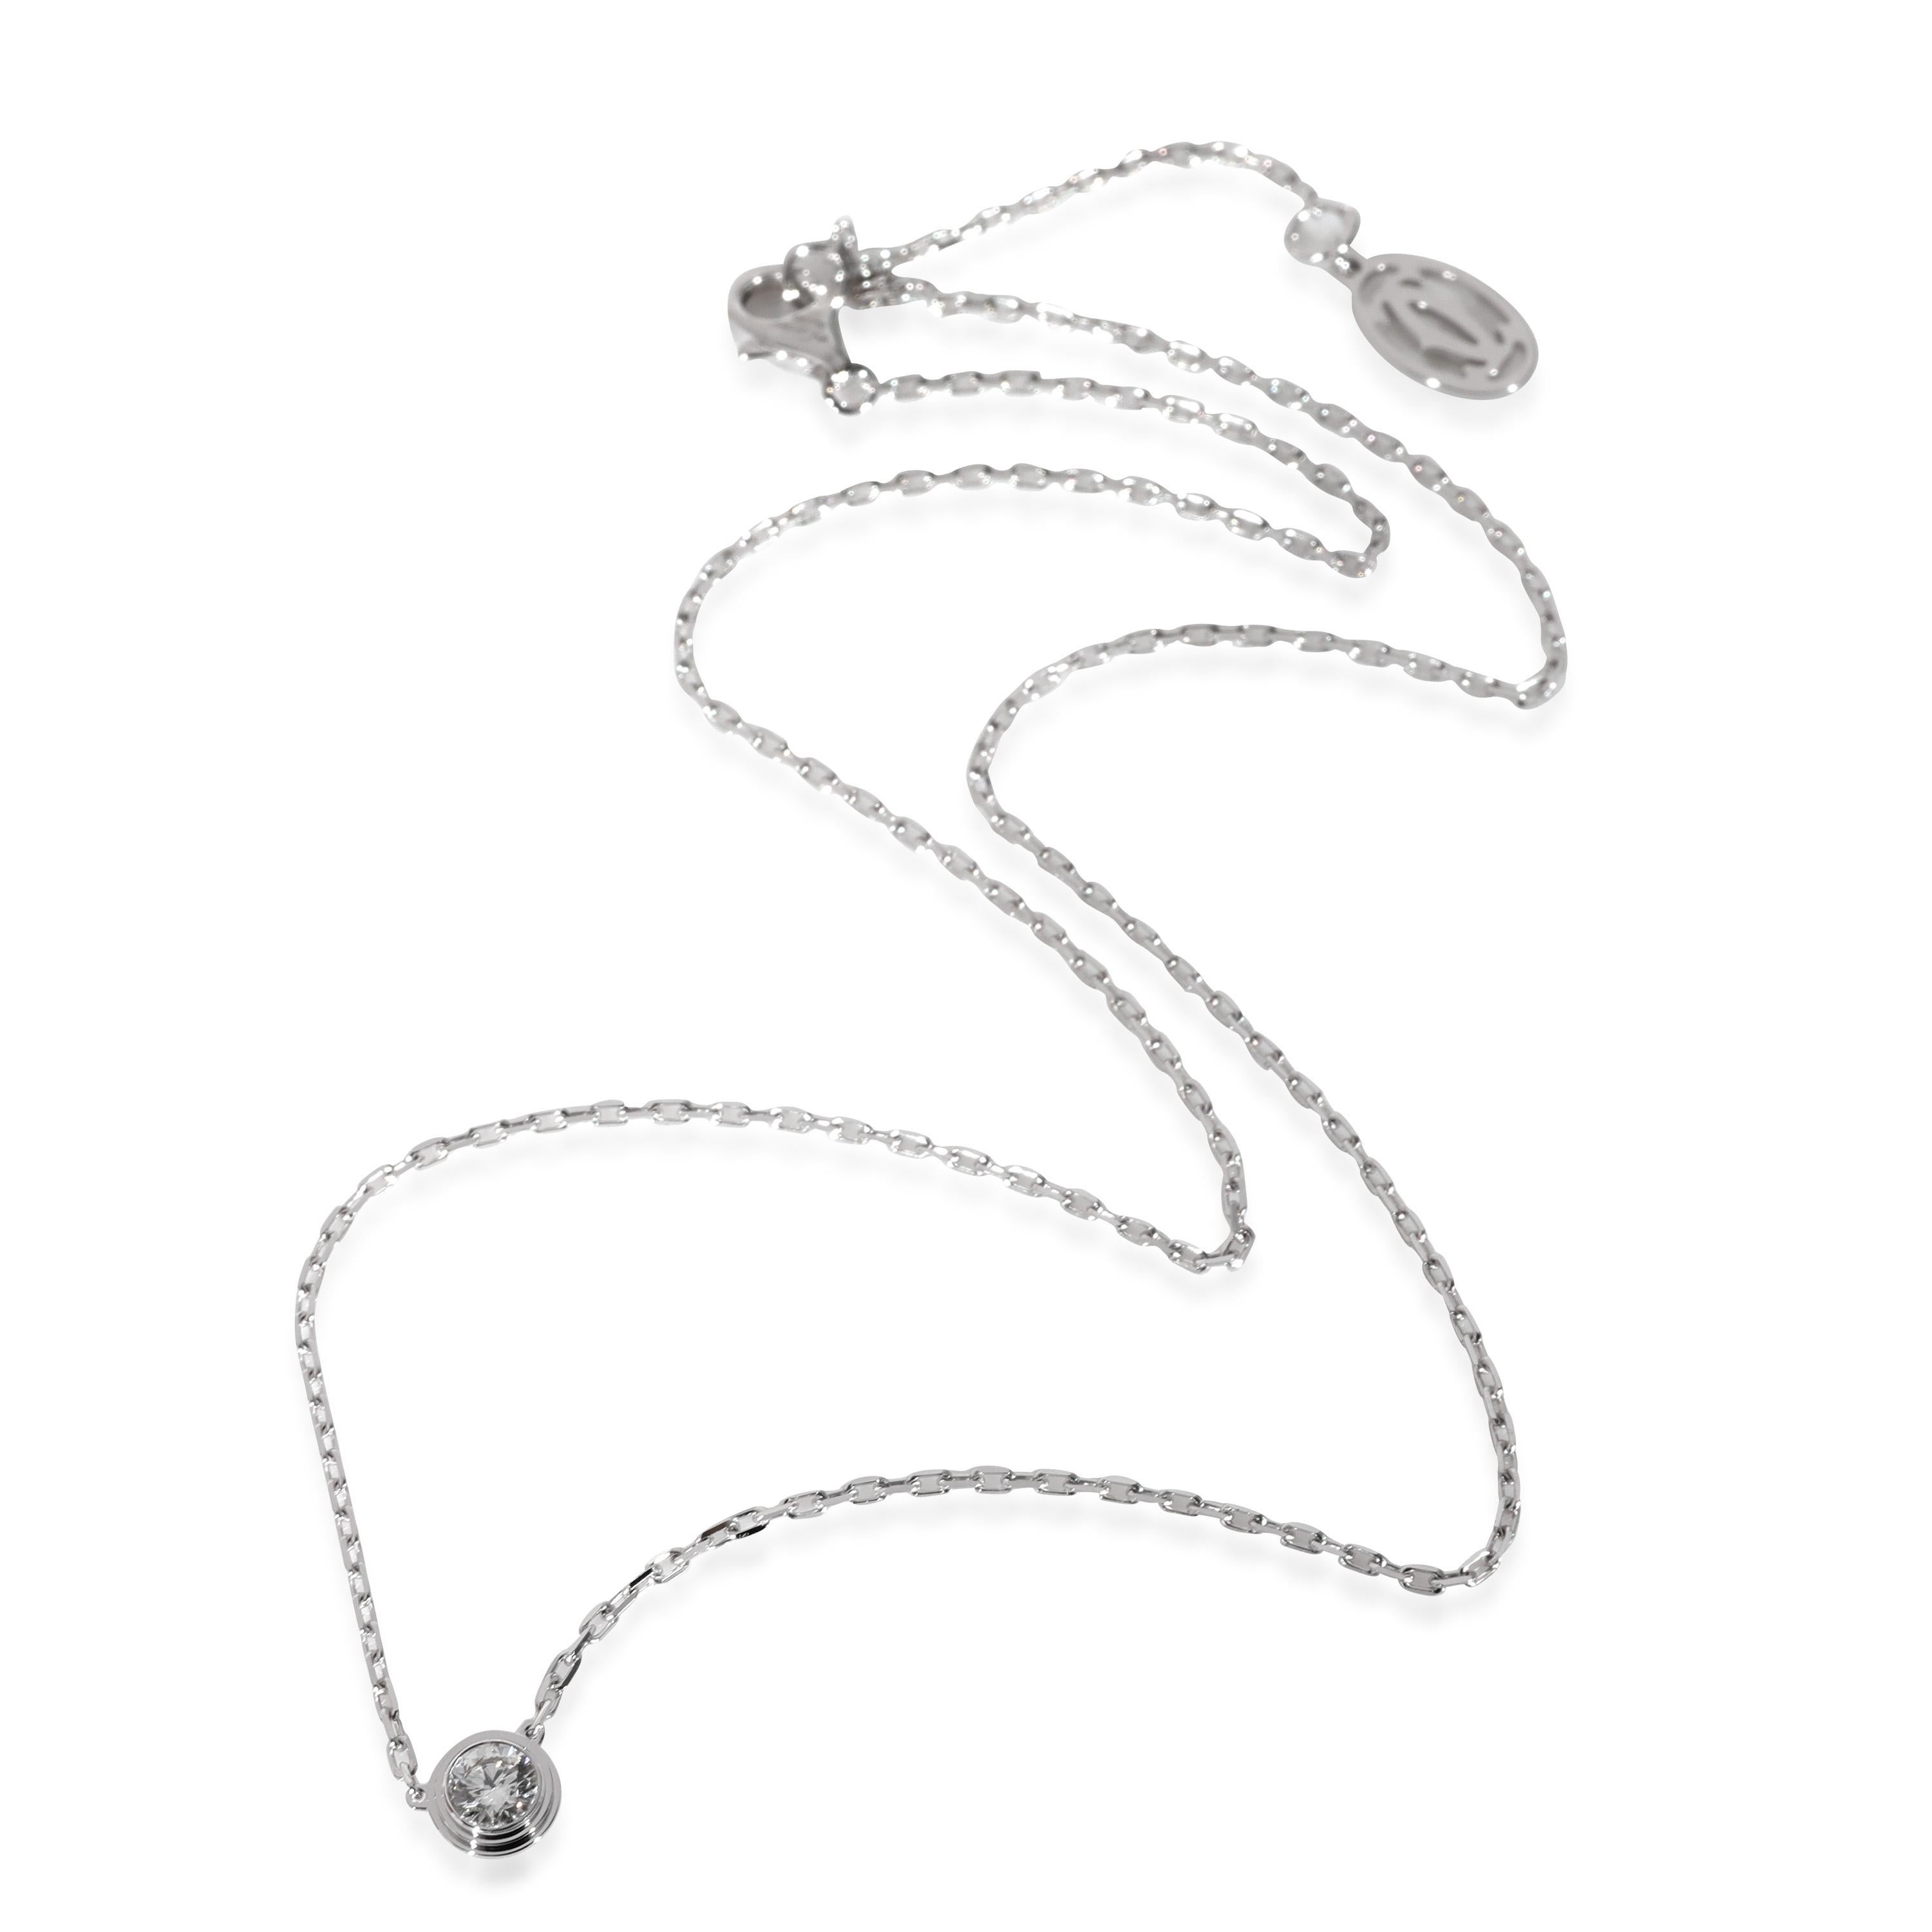 Women's or Men's Cartier D Amour Diamond Solitaire Necklace in 18k White Gold 0.18 CTW